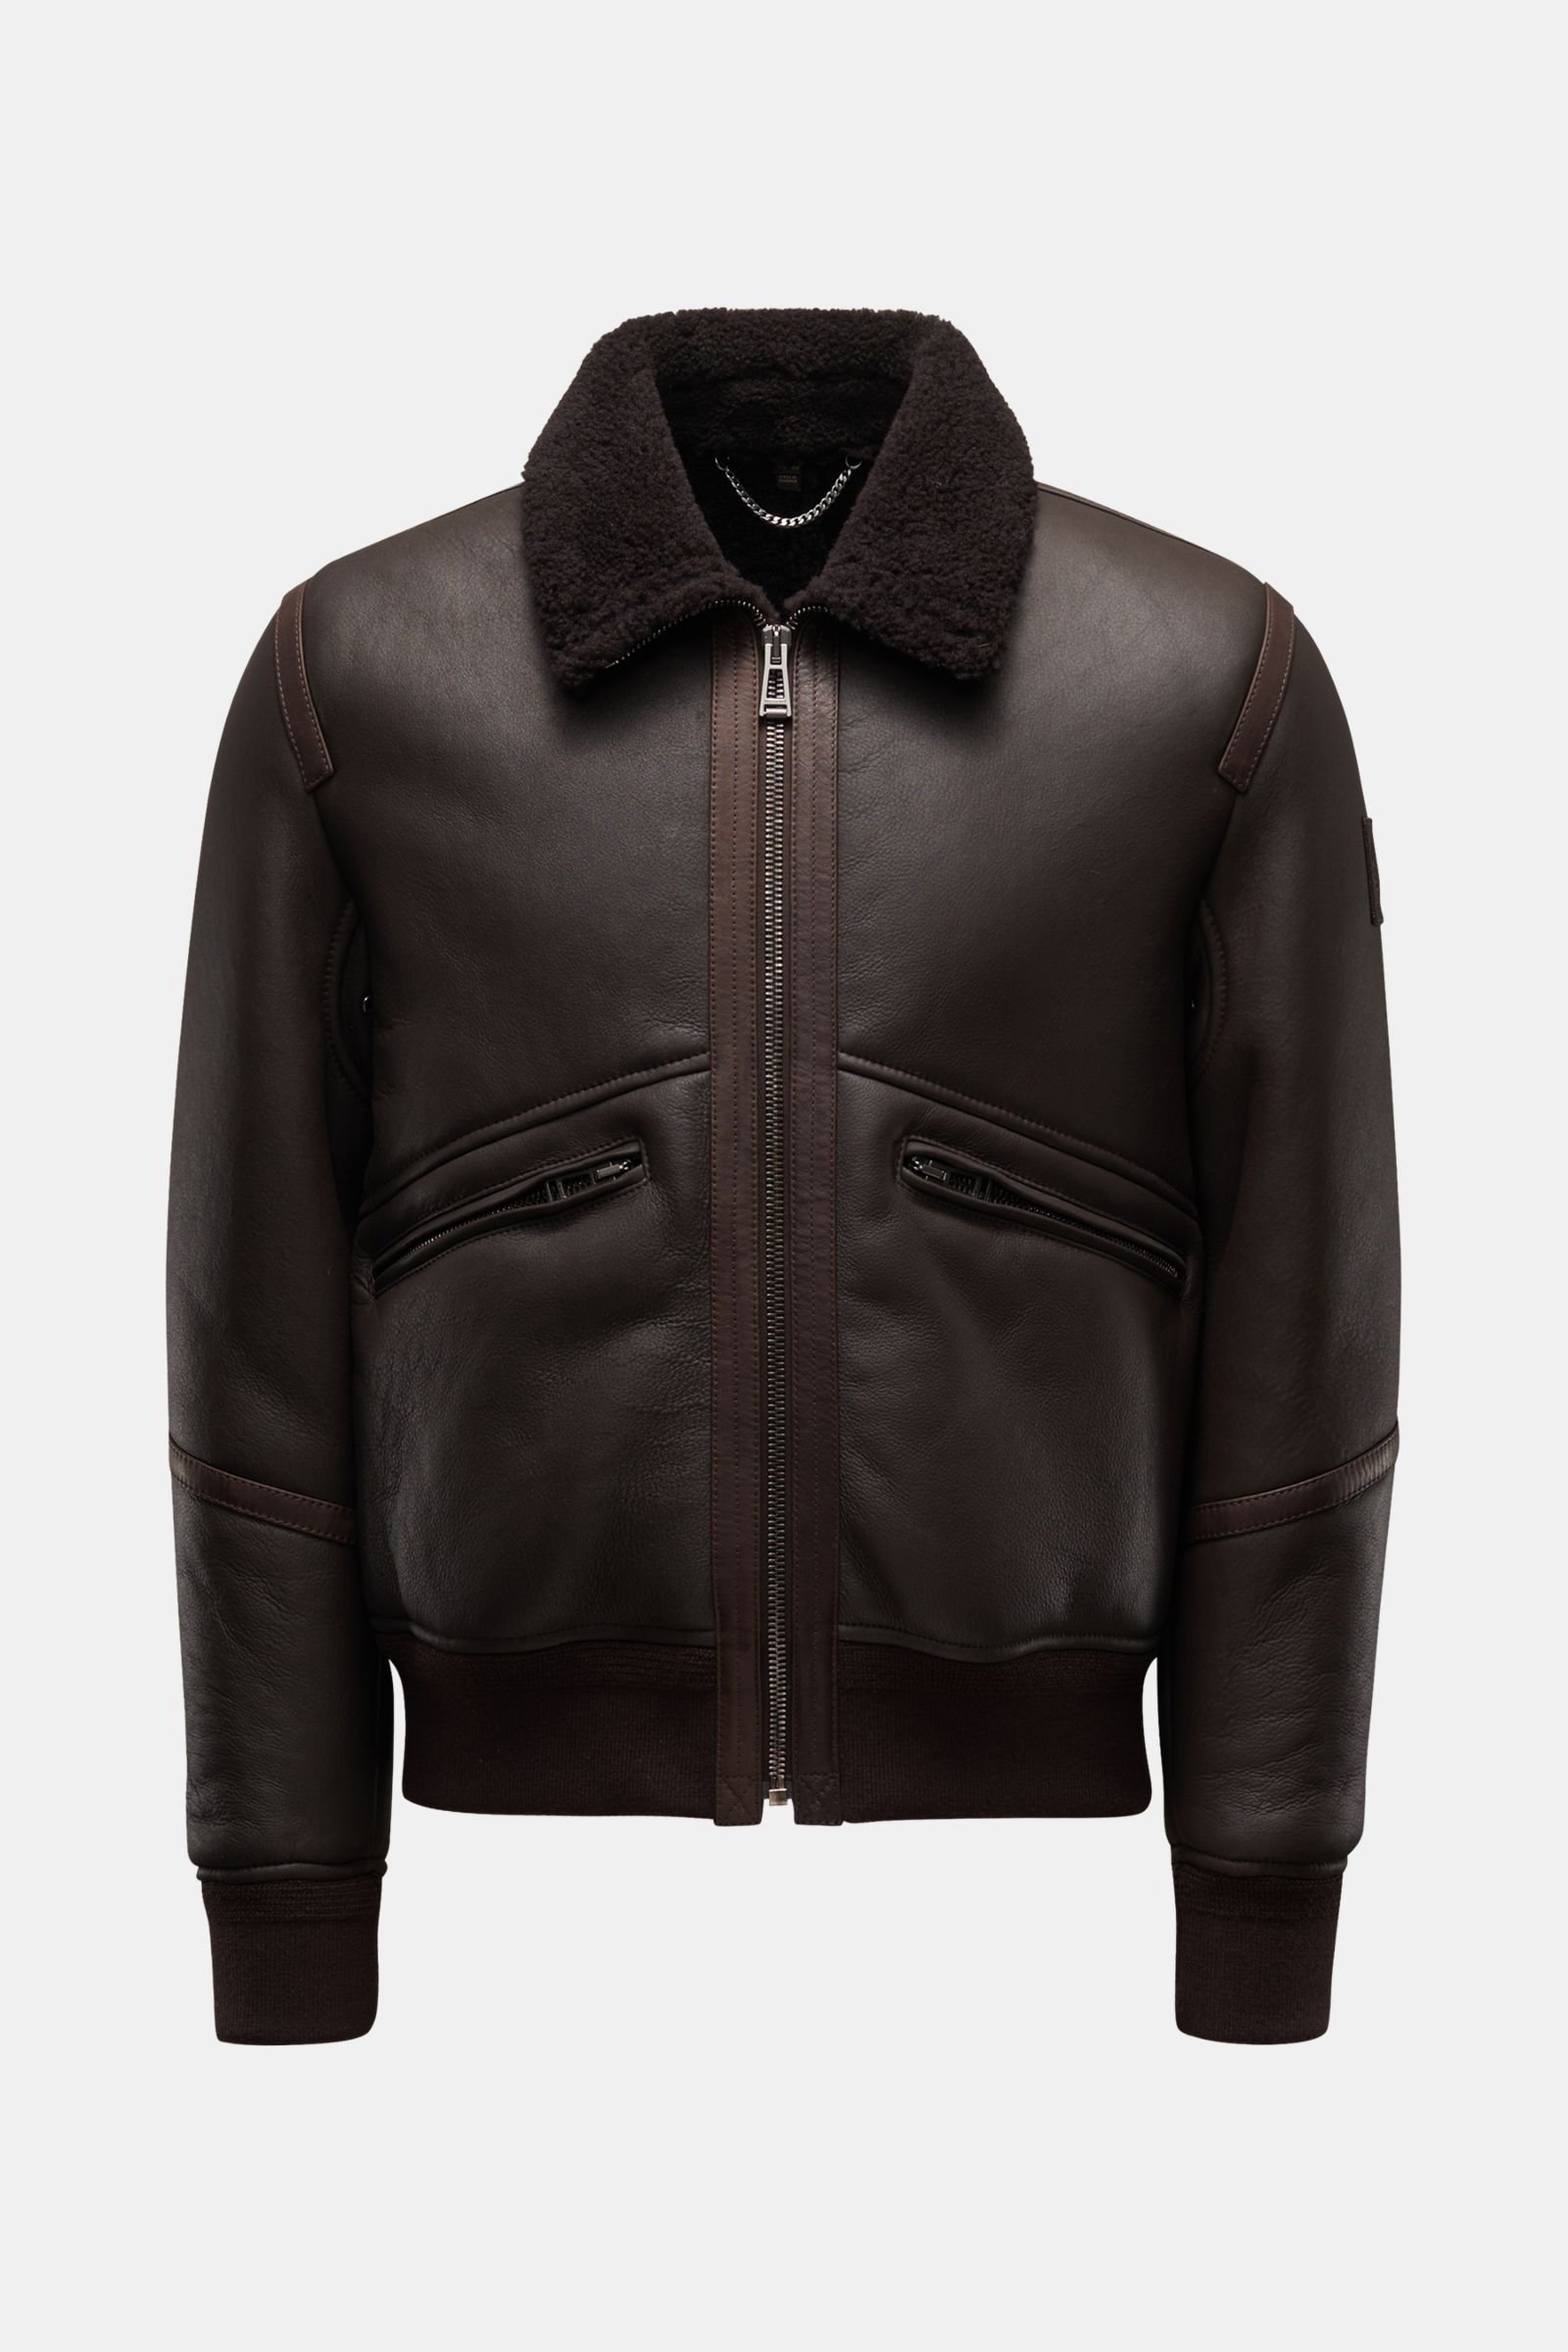 Shearling blouson 'Tracer jacket' dark brown